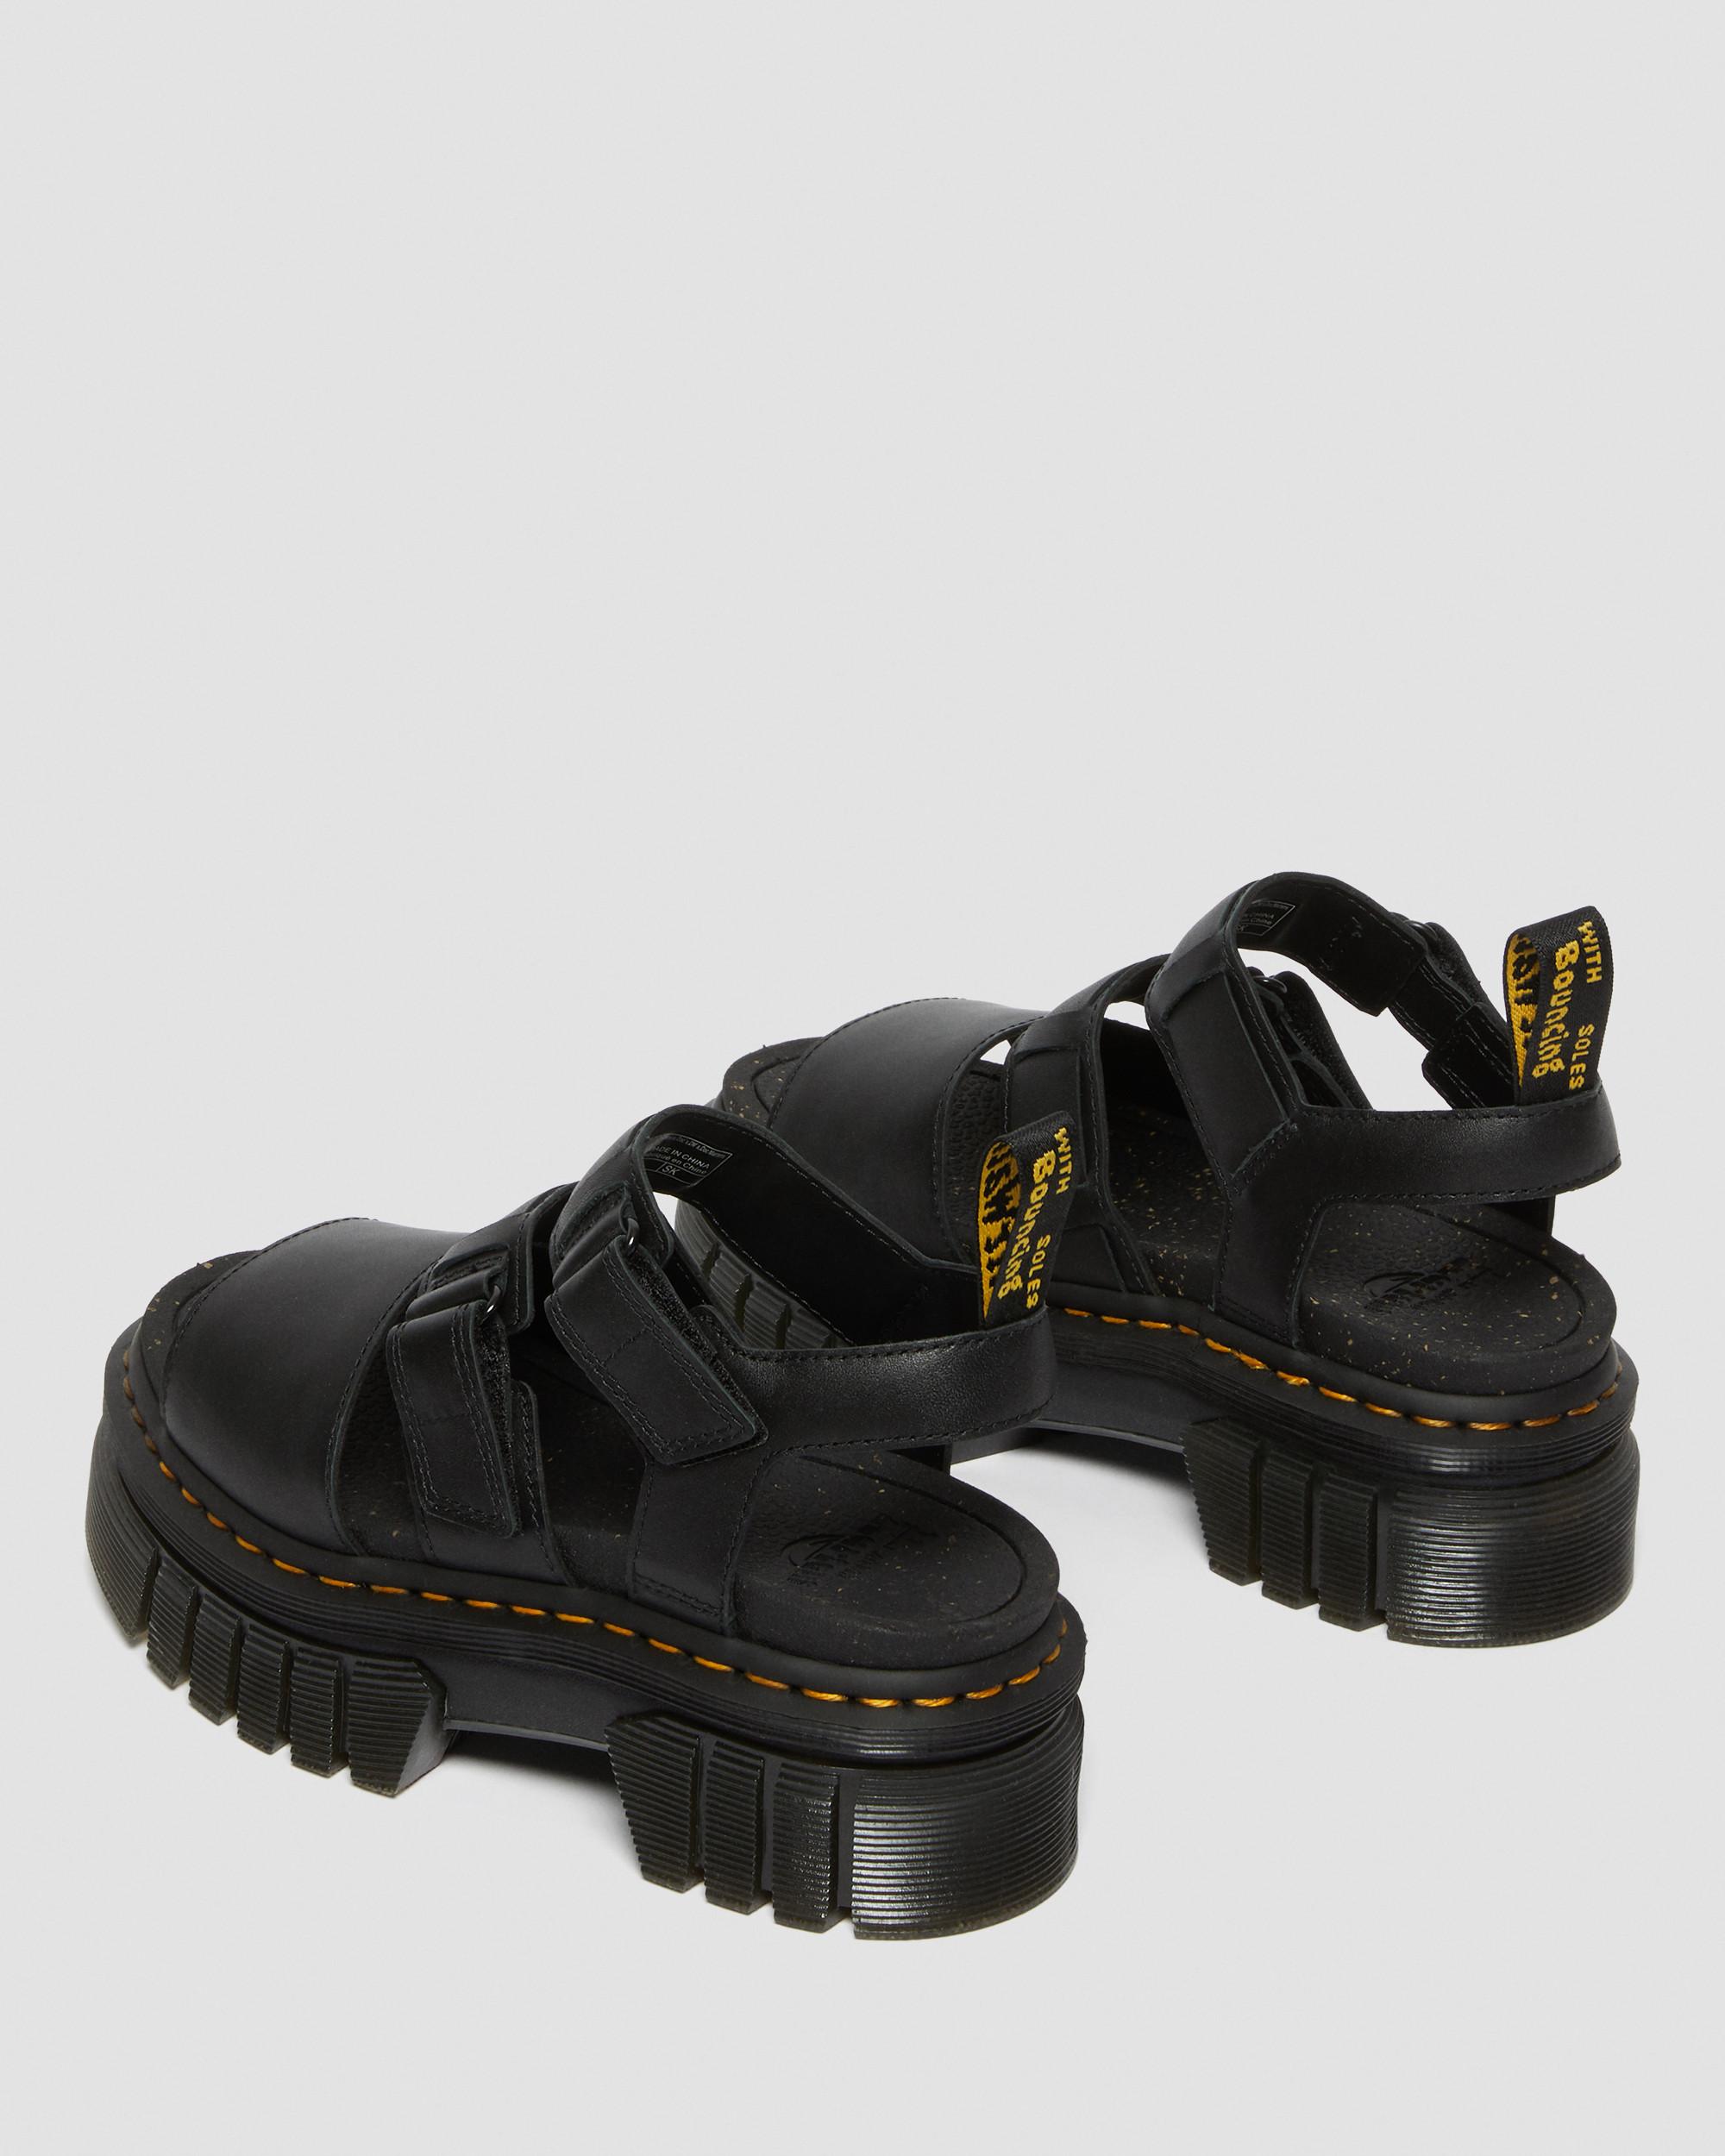 Ricki 3-Strap Nappa Lux Leather Sandals